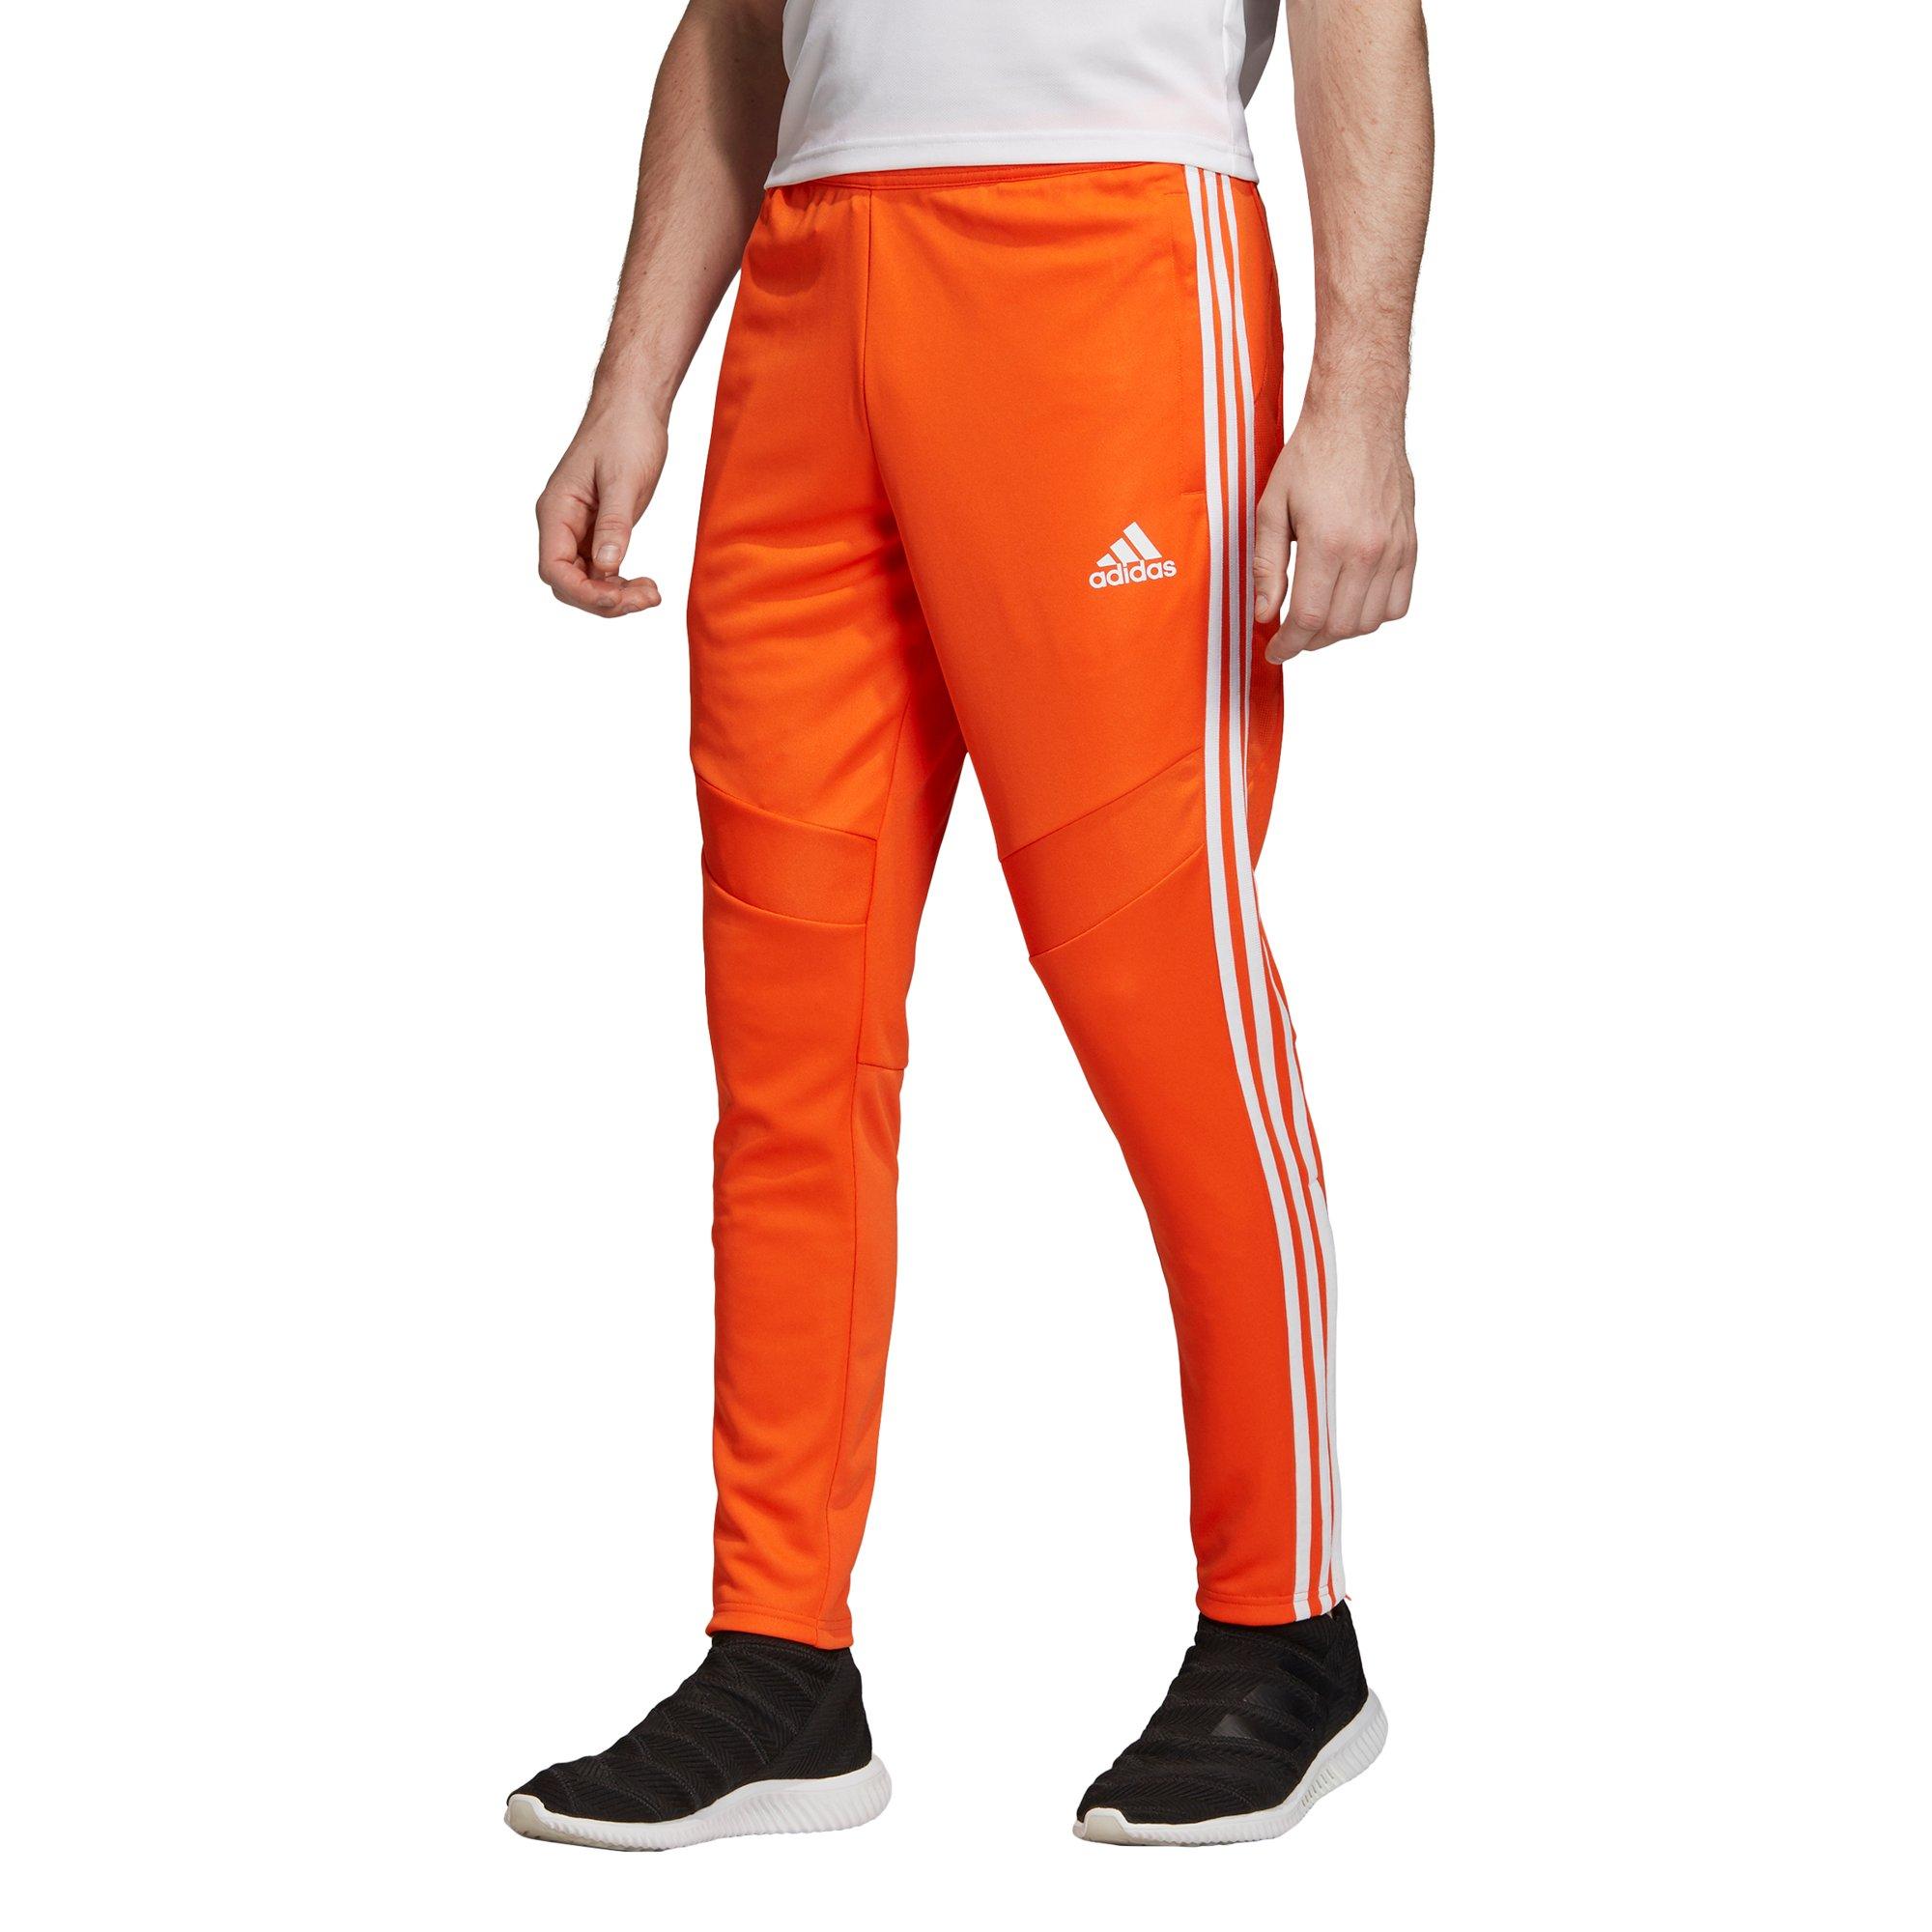 adidas climacool pants orange